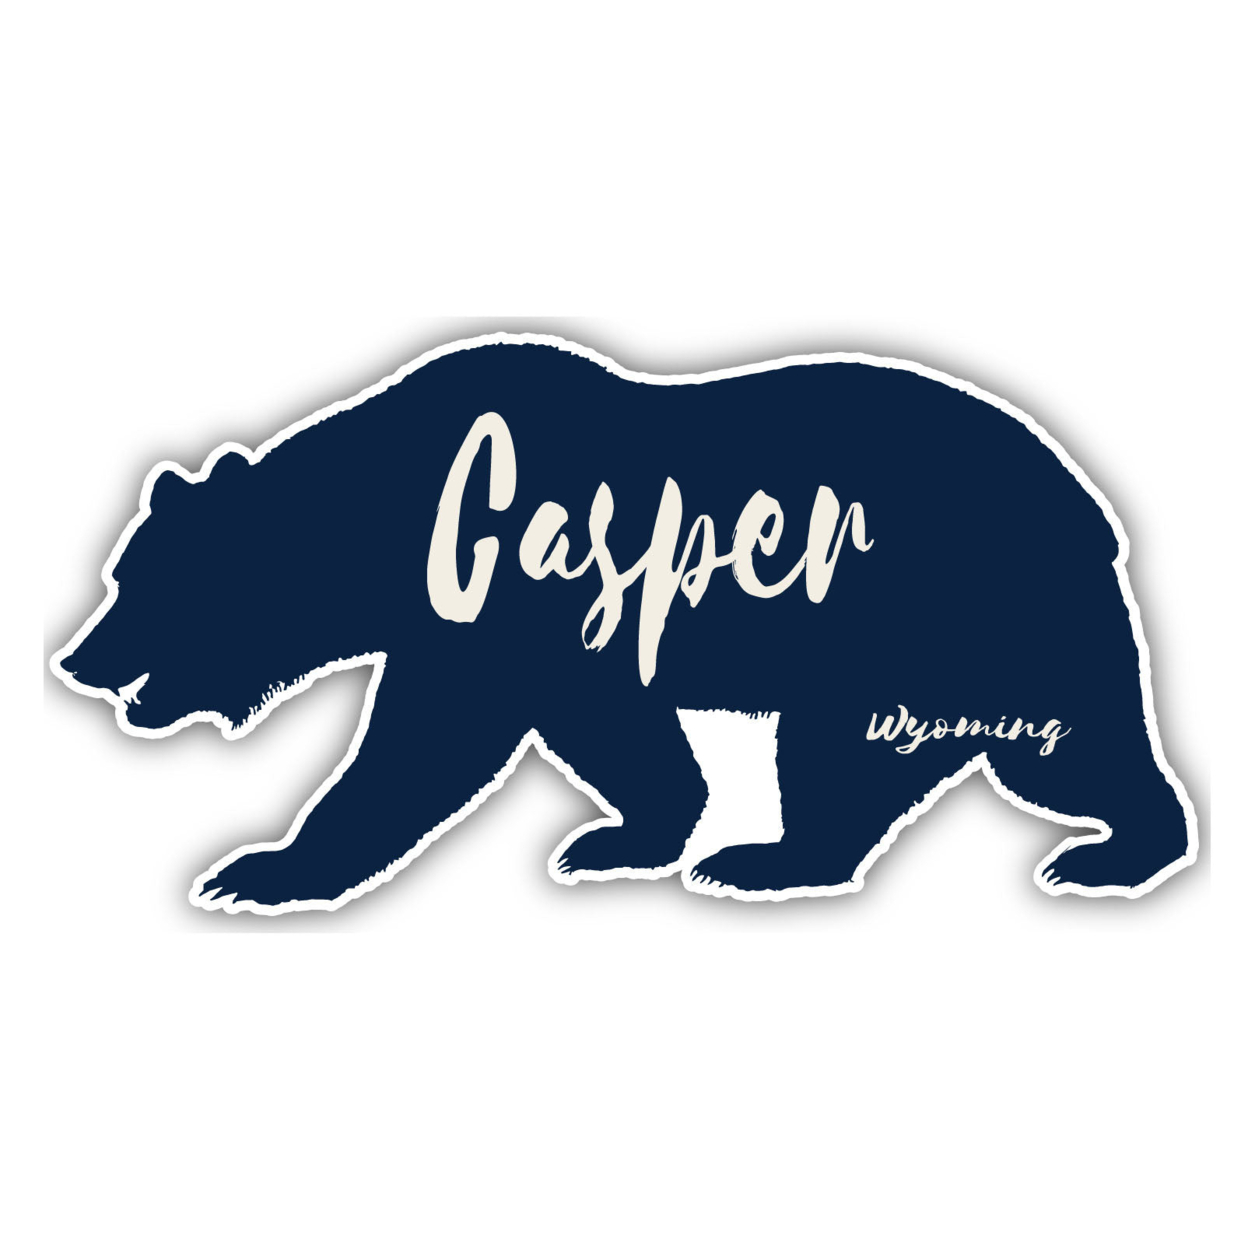 Casper Wyoming Souvenir Decorative Stickers (Choose Theme And Size) - Single Unit, 4-Inch, Camp Life